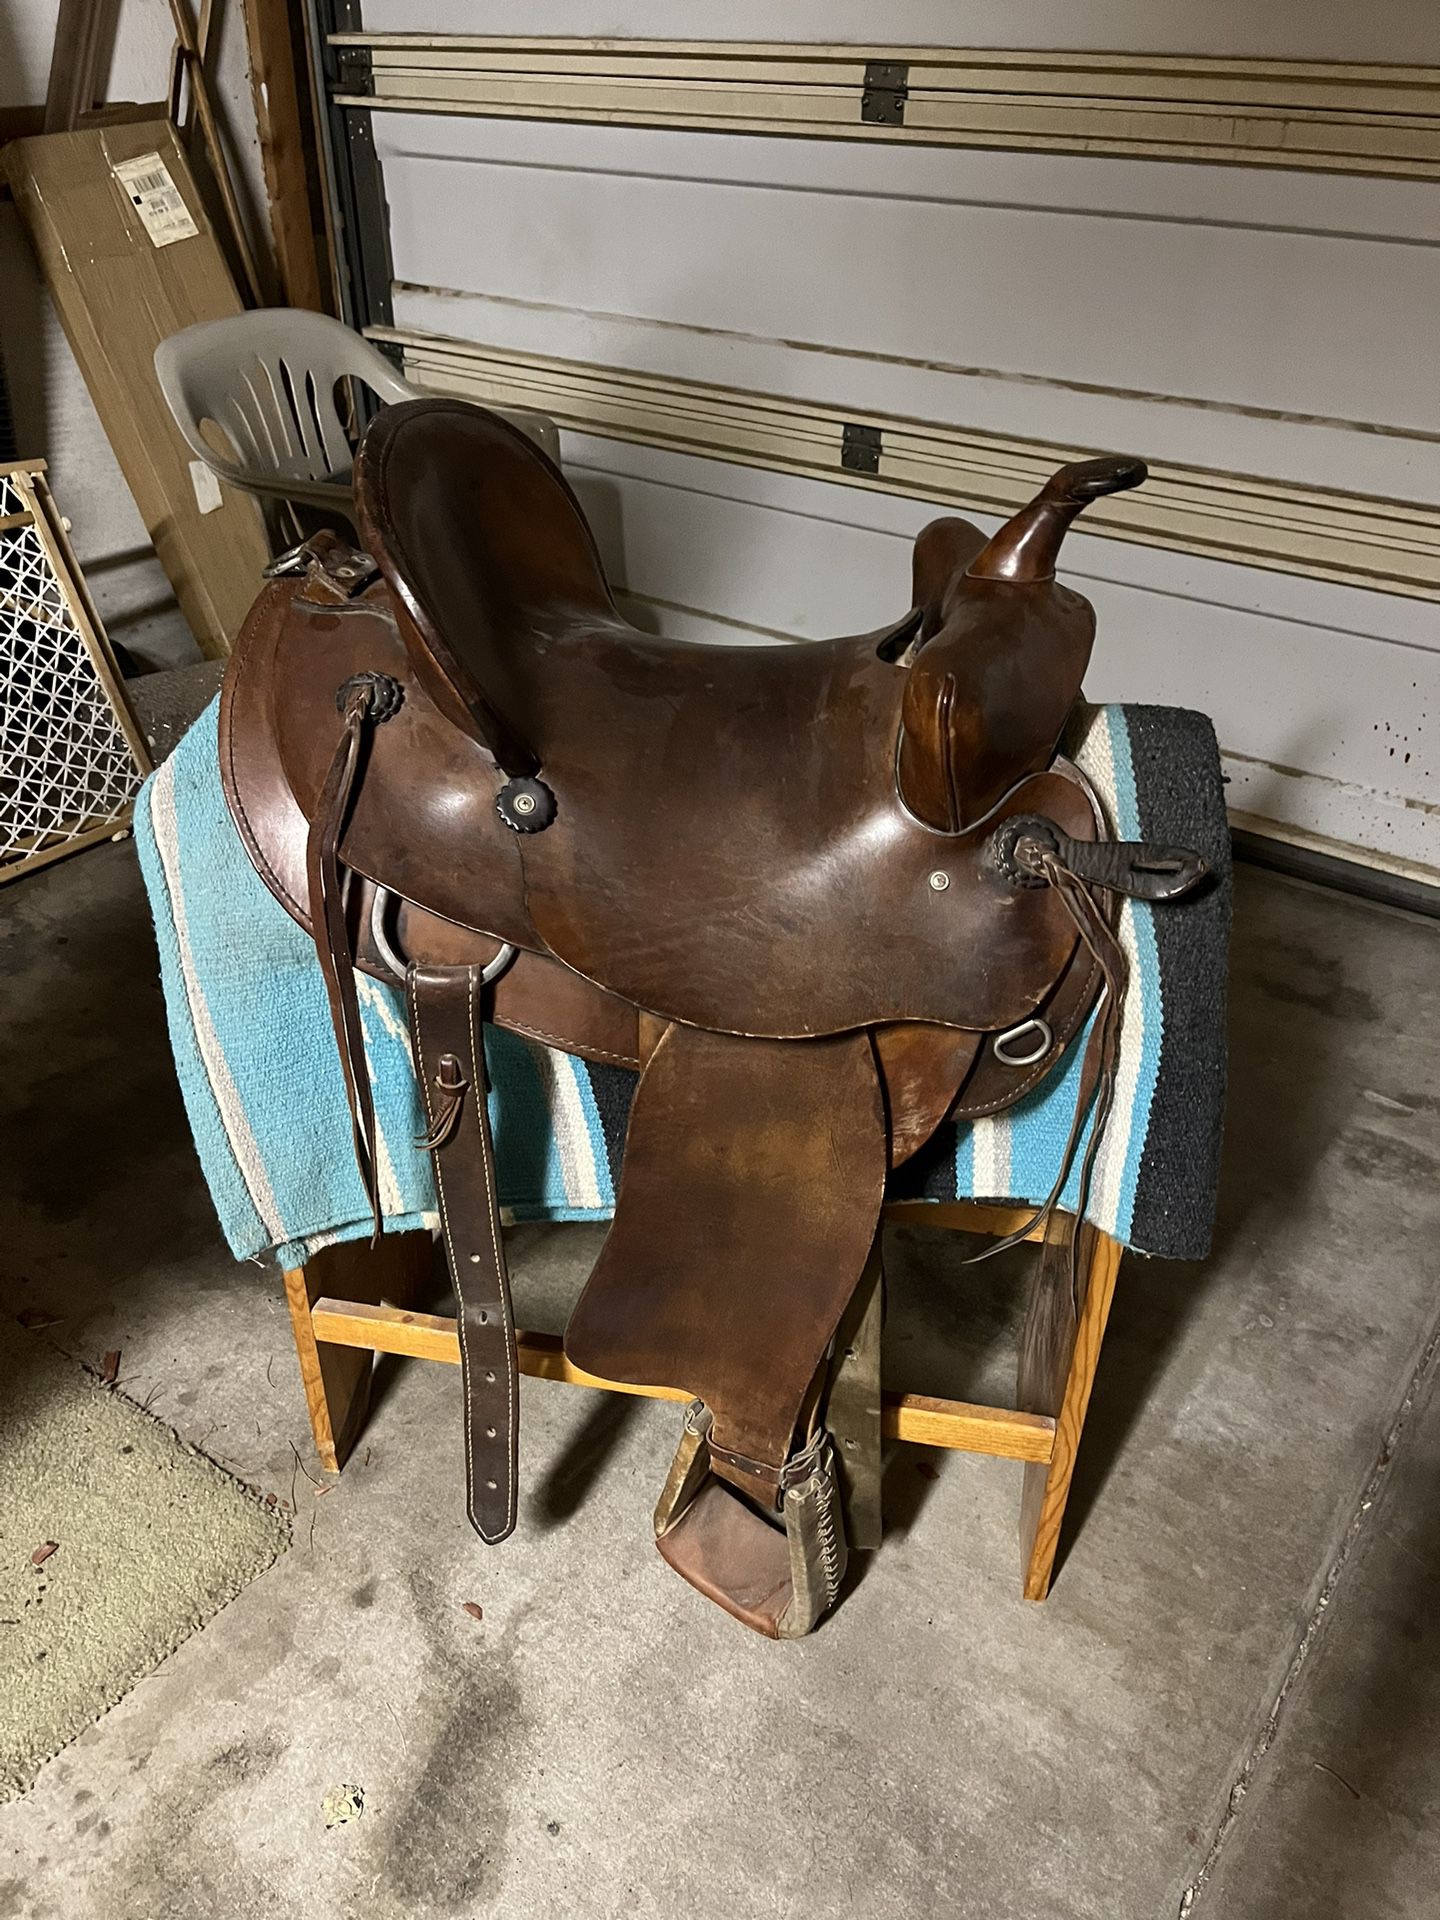 American saddle - Dakota Saddle 